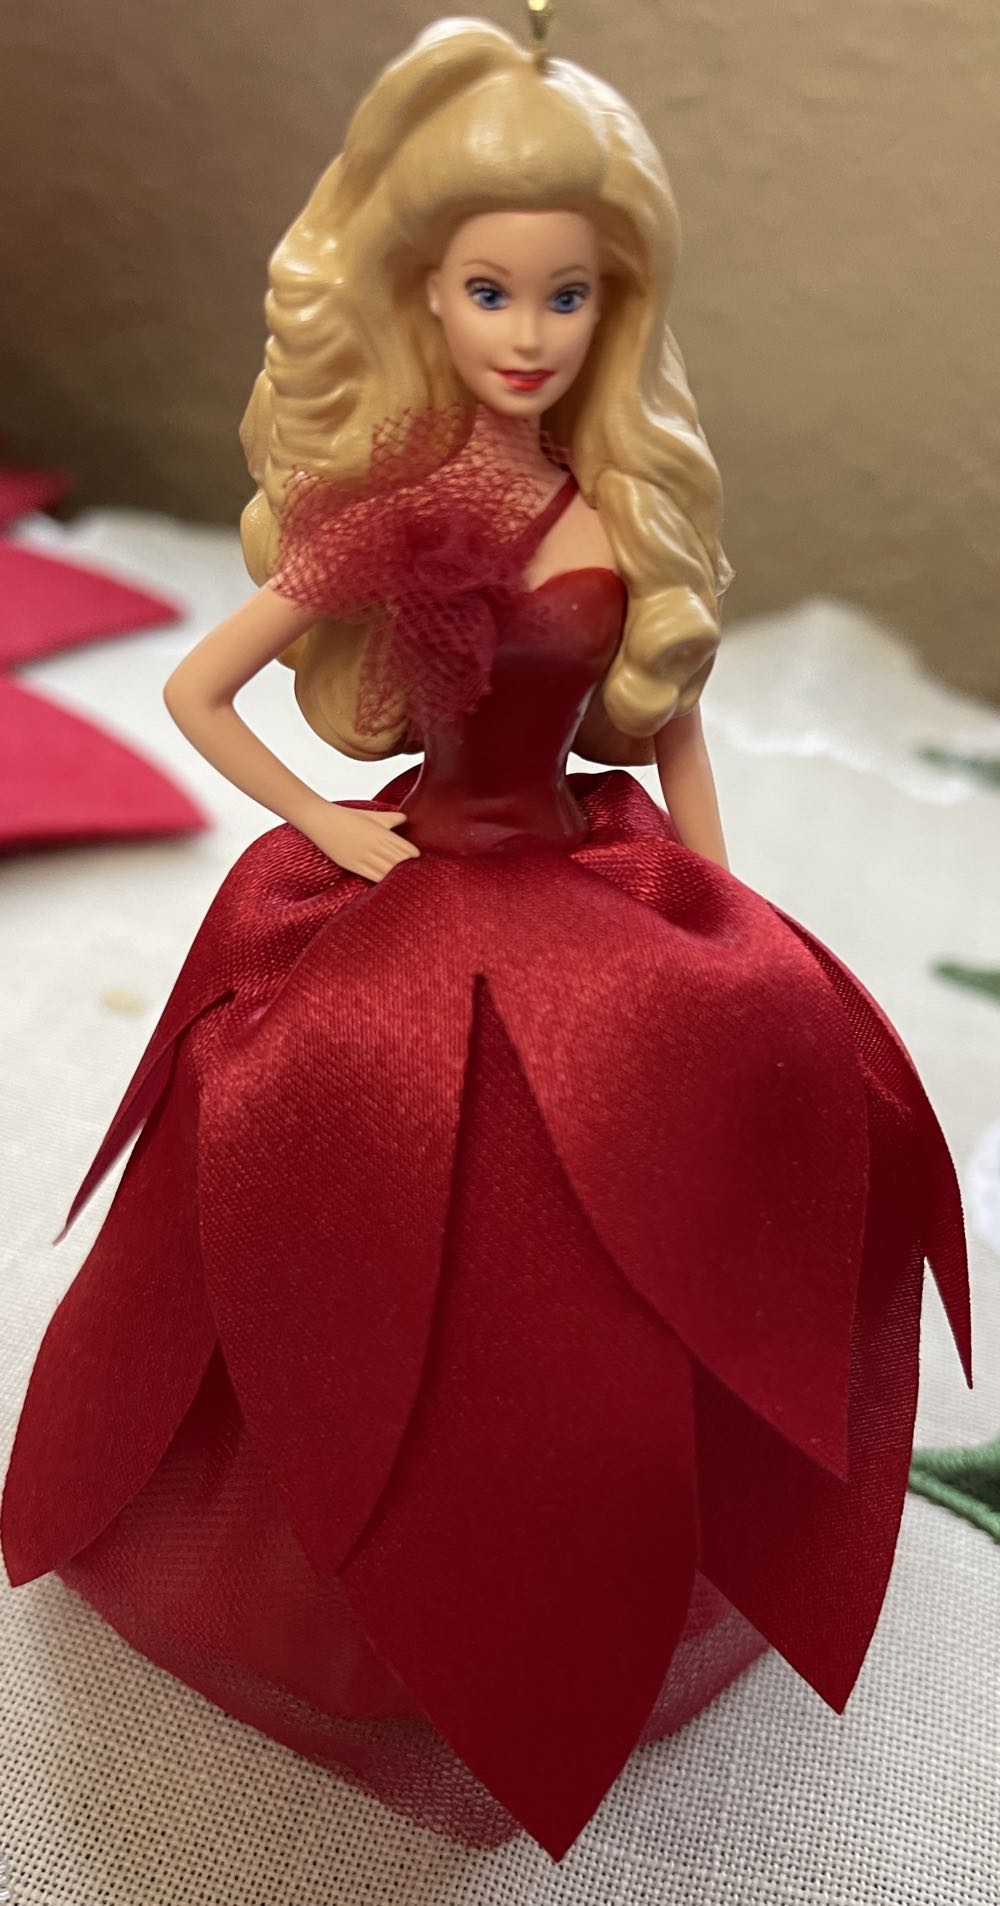 Holiday Barbie Ornament - Holiday Barbie Ornament Series (Baribe) ornament collectible - Main Image 1